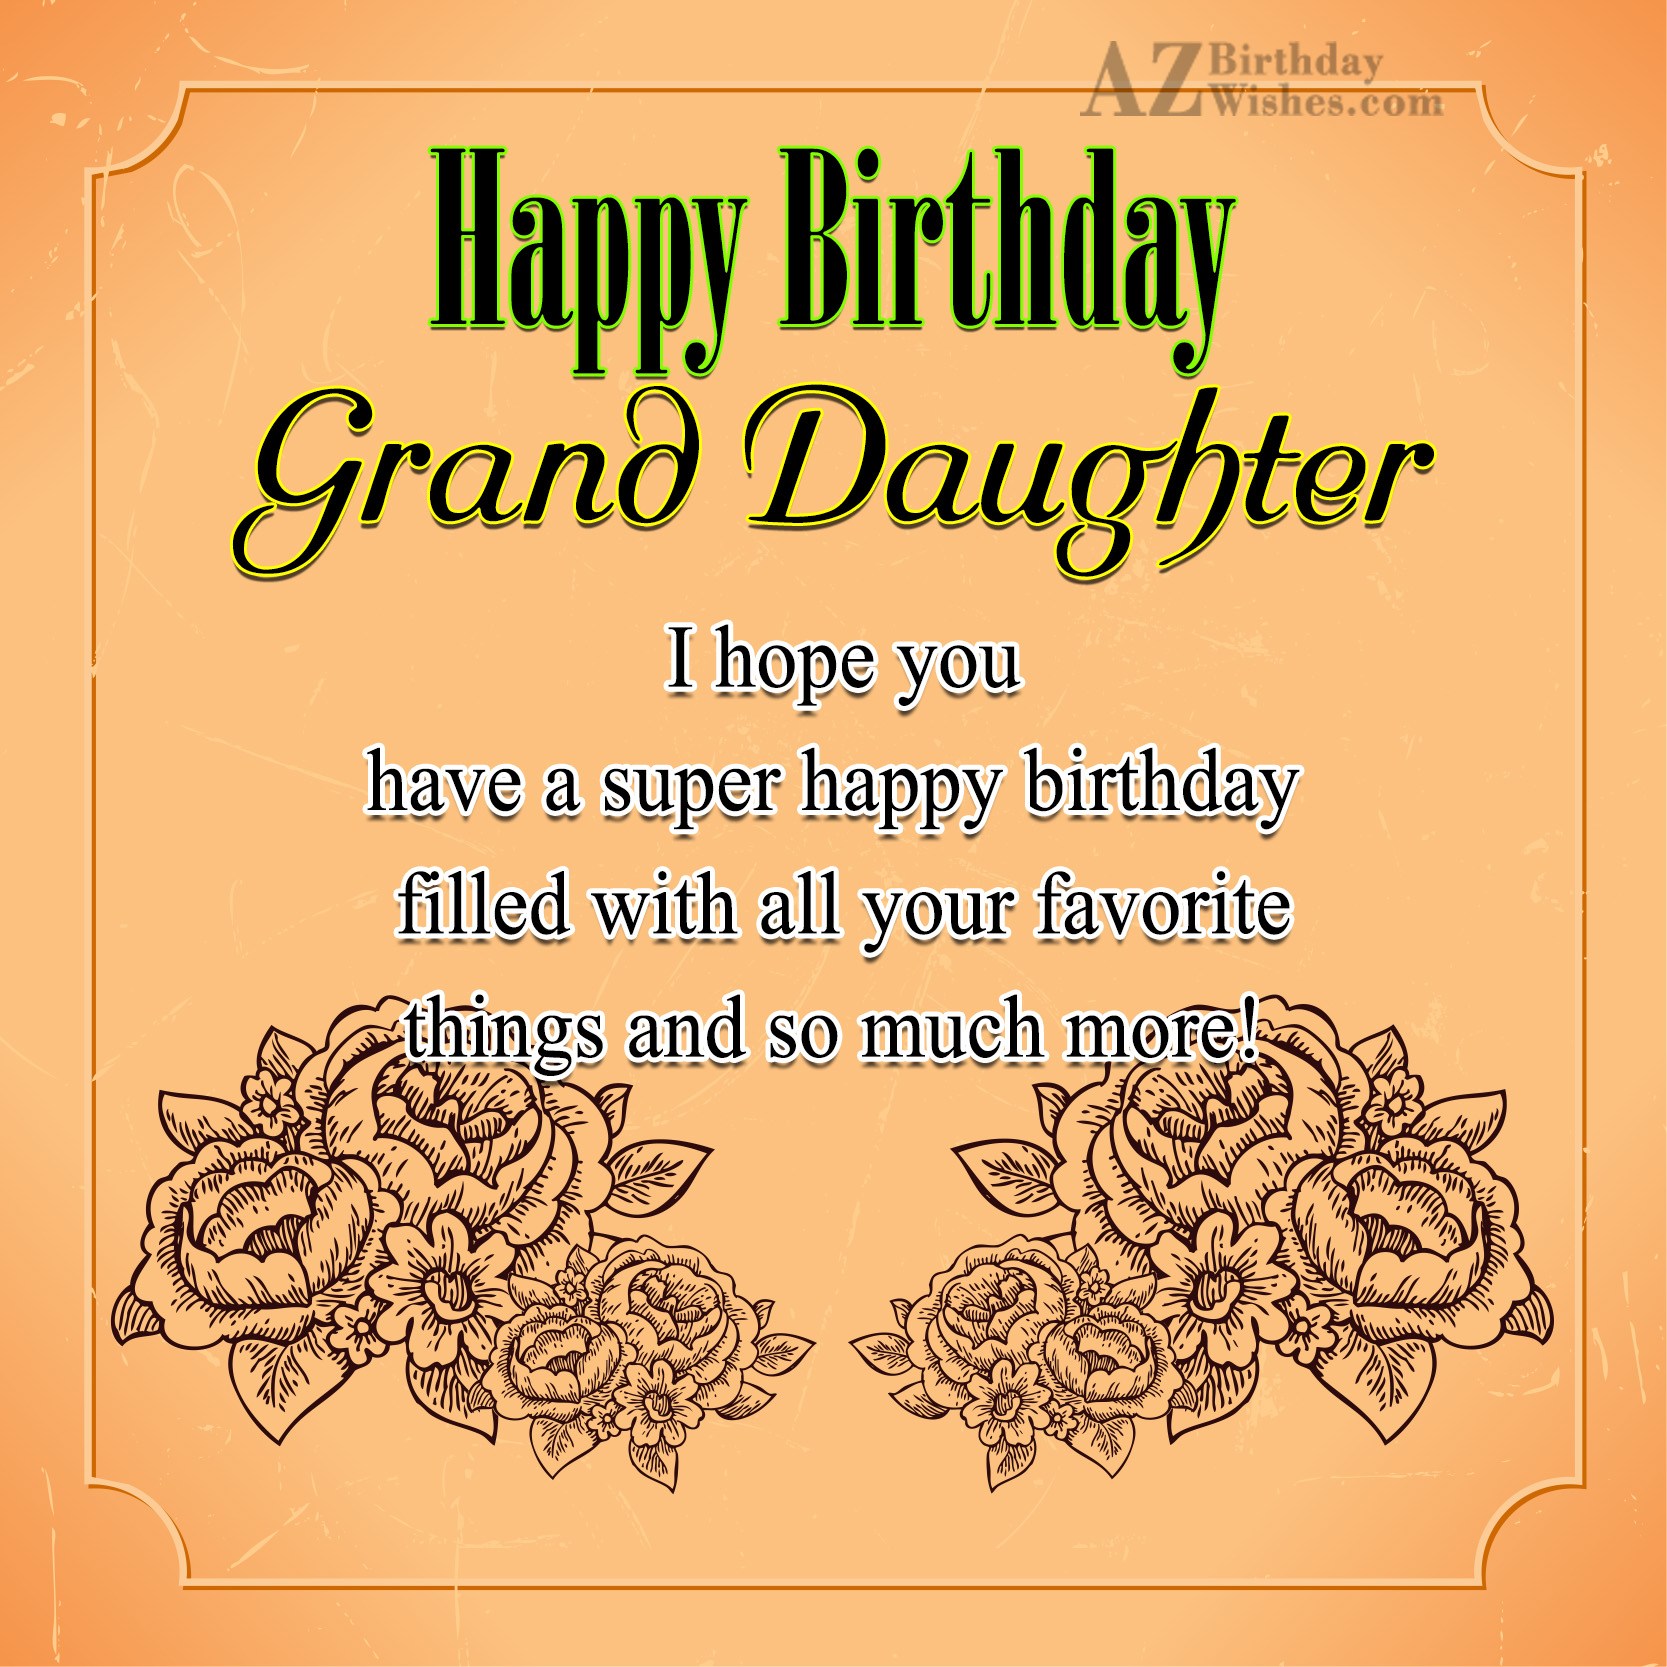 granddaughter-birthday-card-granddaughter-sending-loving-wishes-for-a